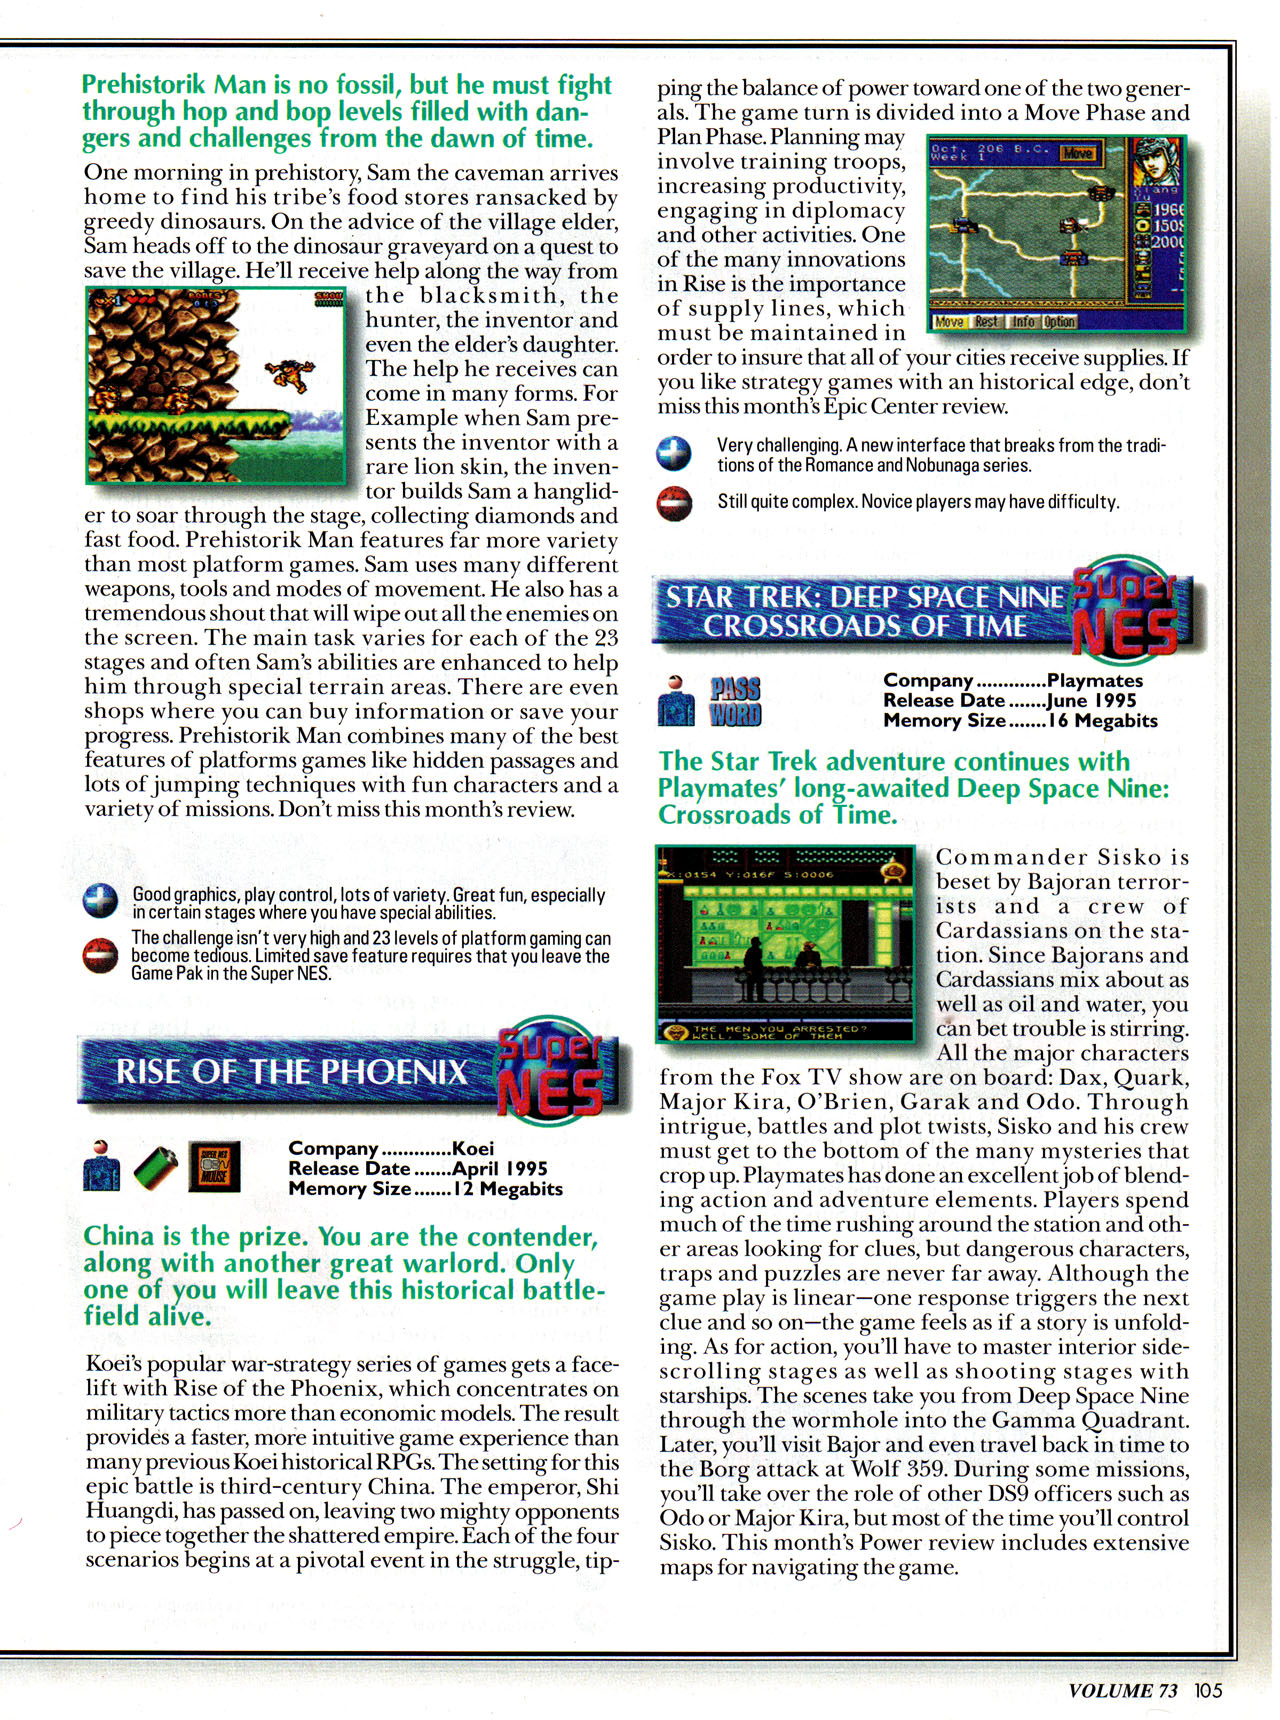 Read online Nintendo Power comic -  Issue #73 - 114